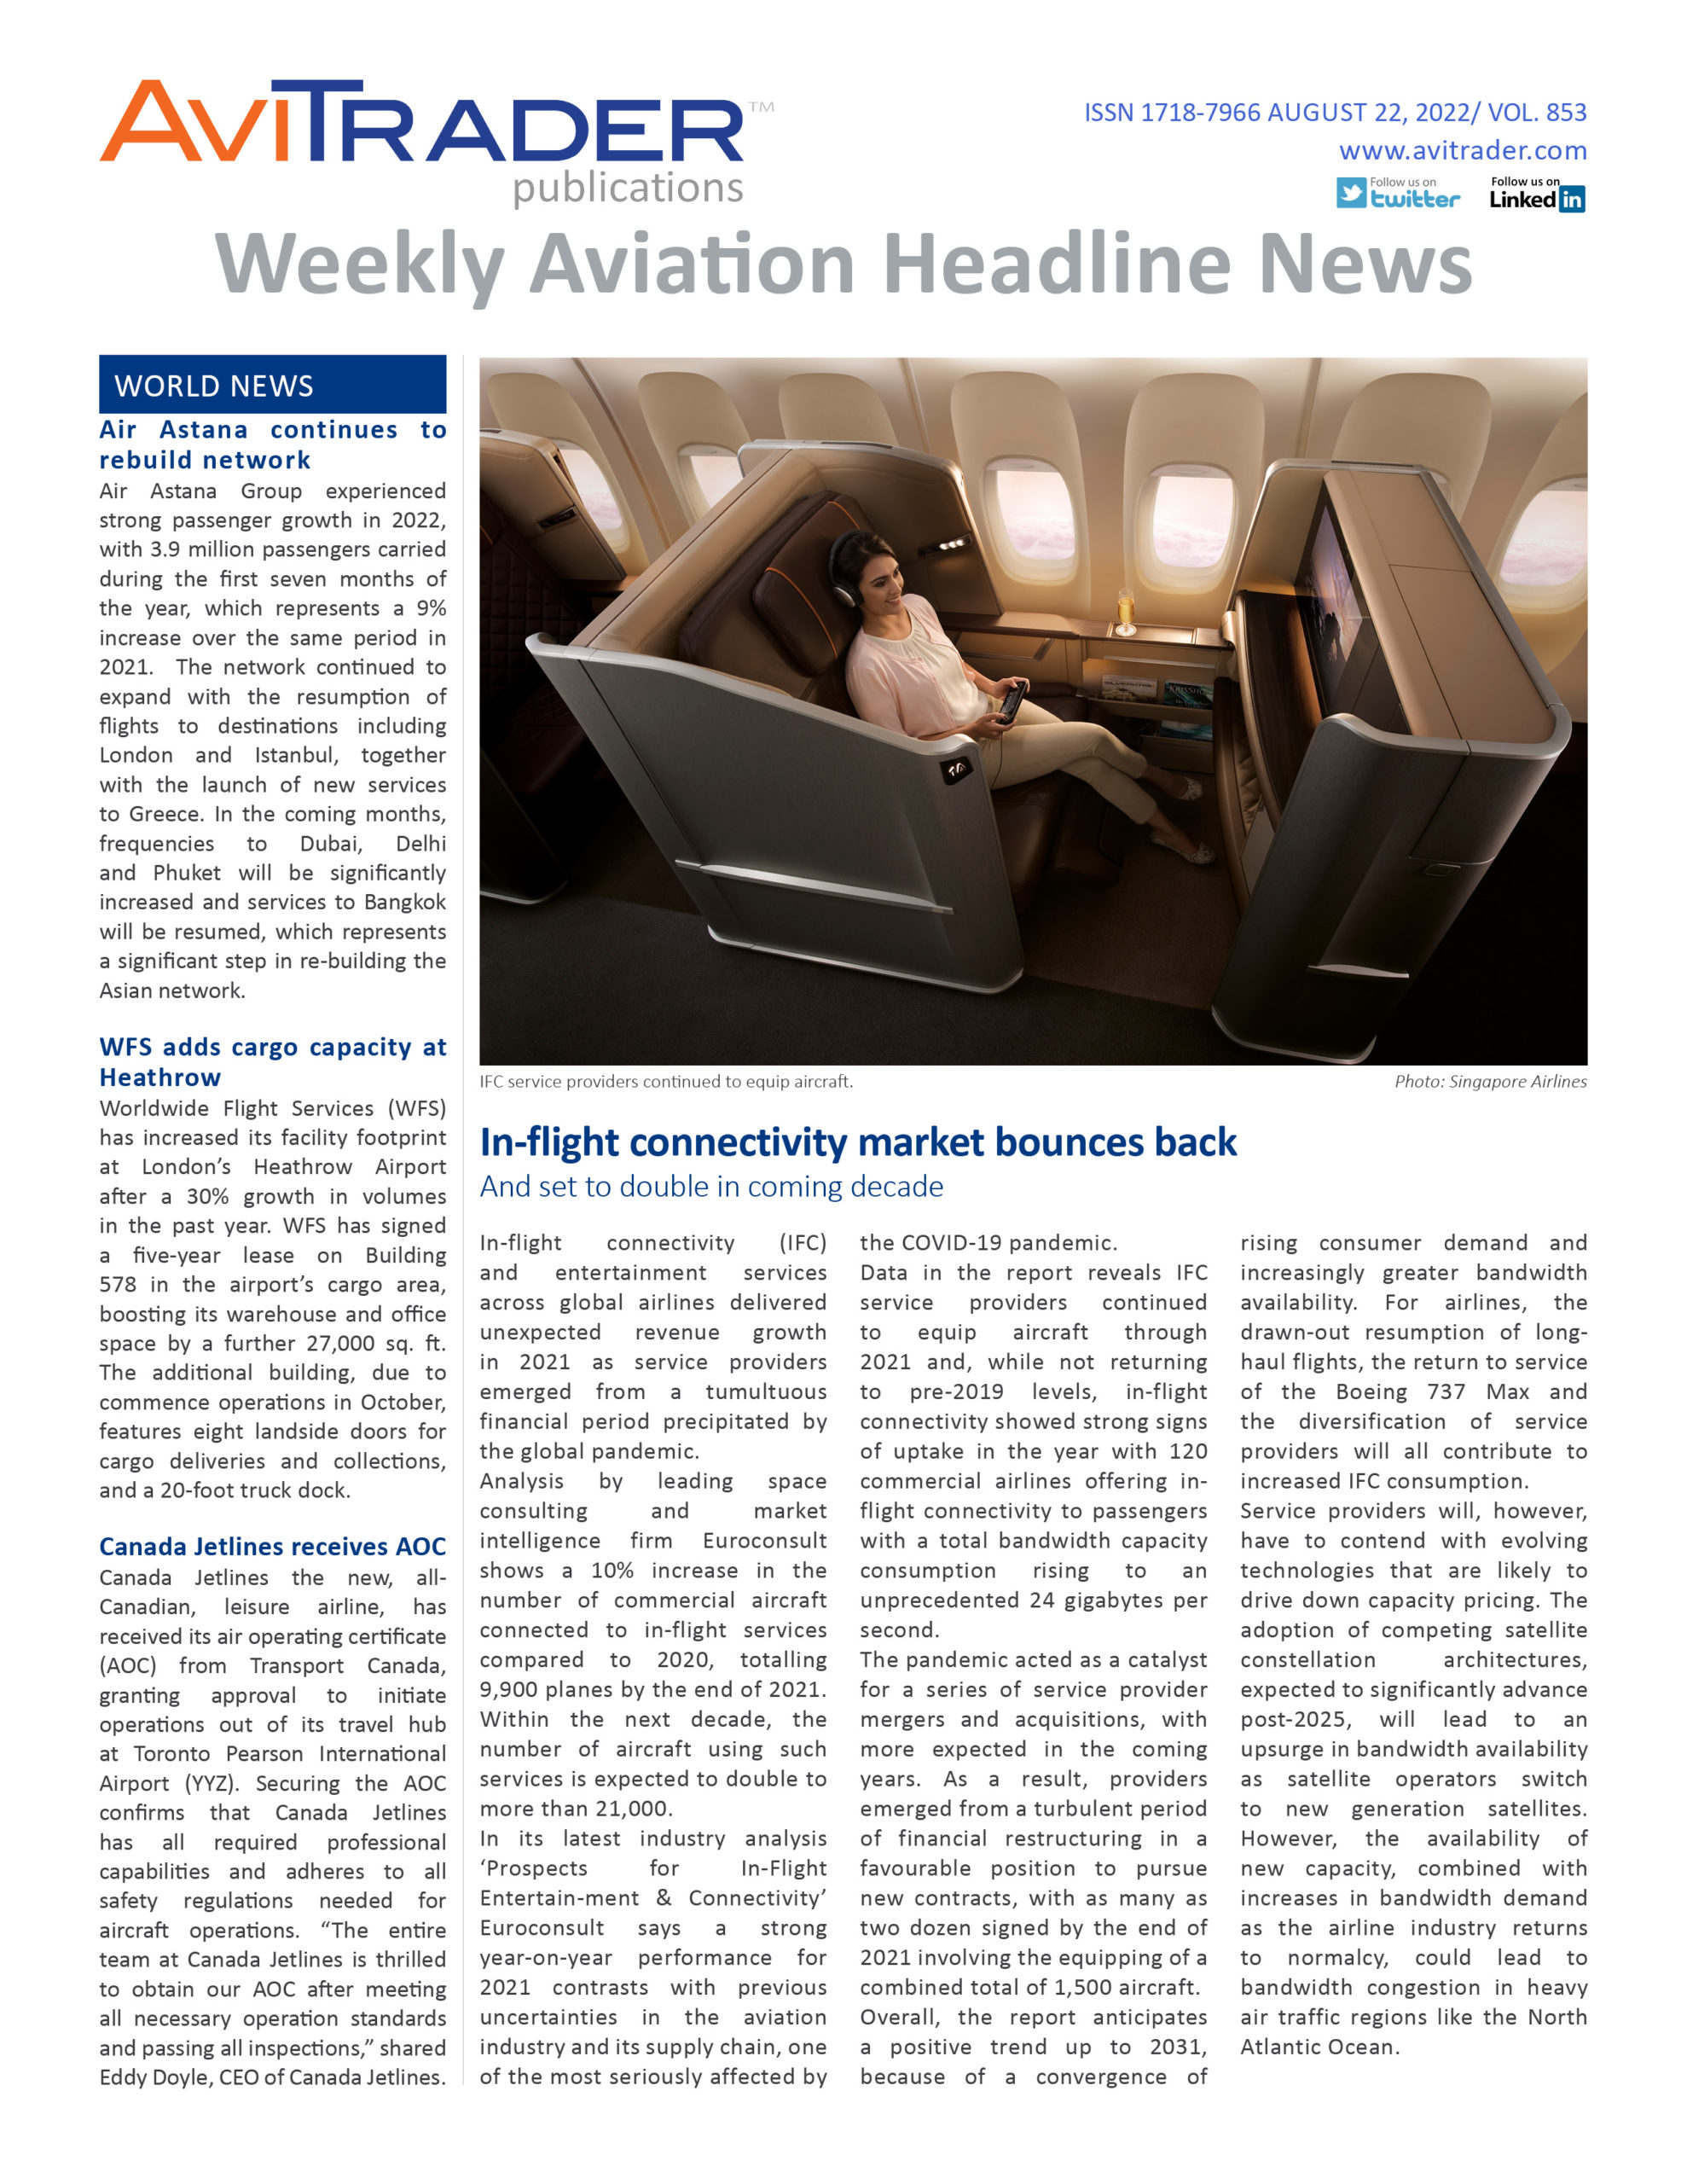 AviTrader_Weekly_Headline_News_Cover_2022-08-22